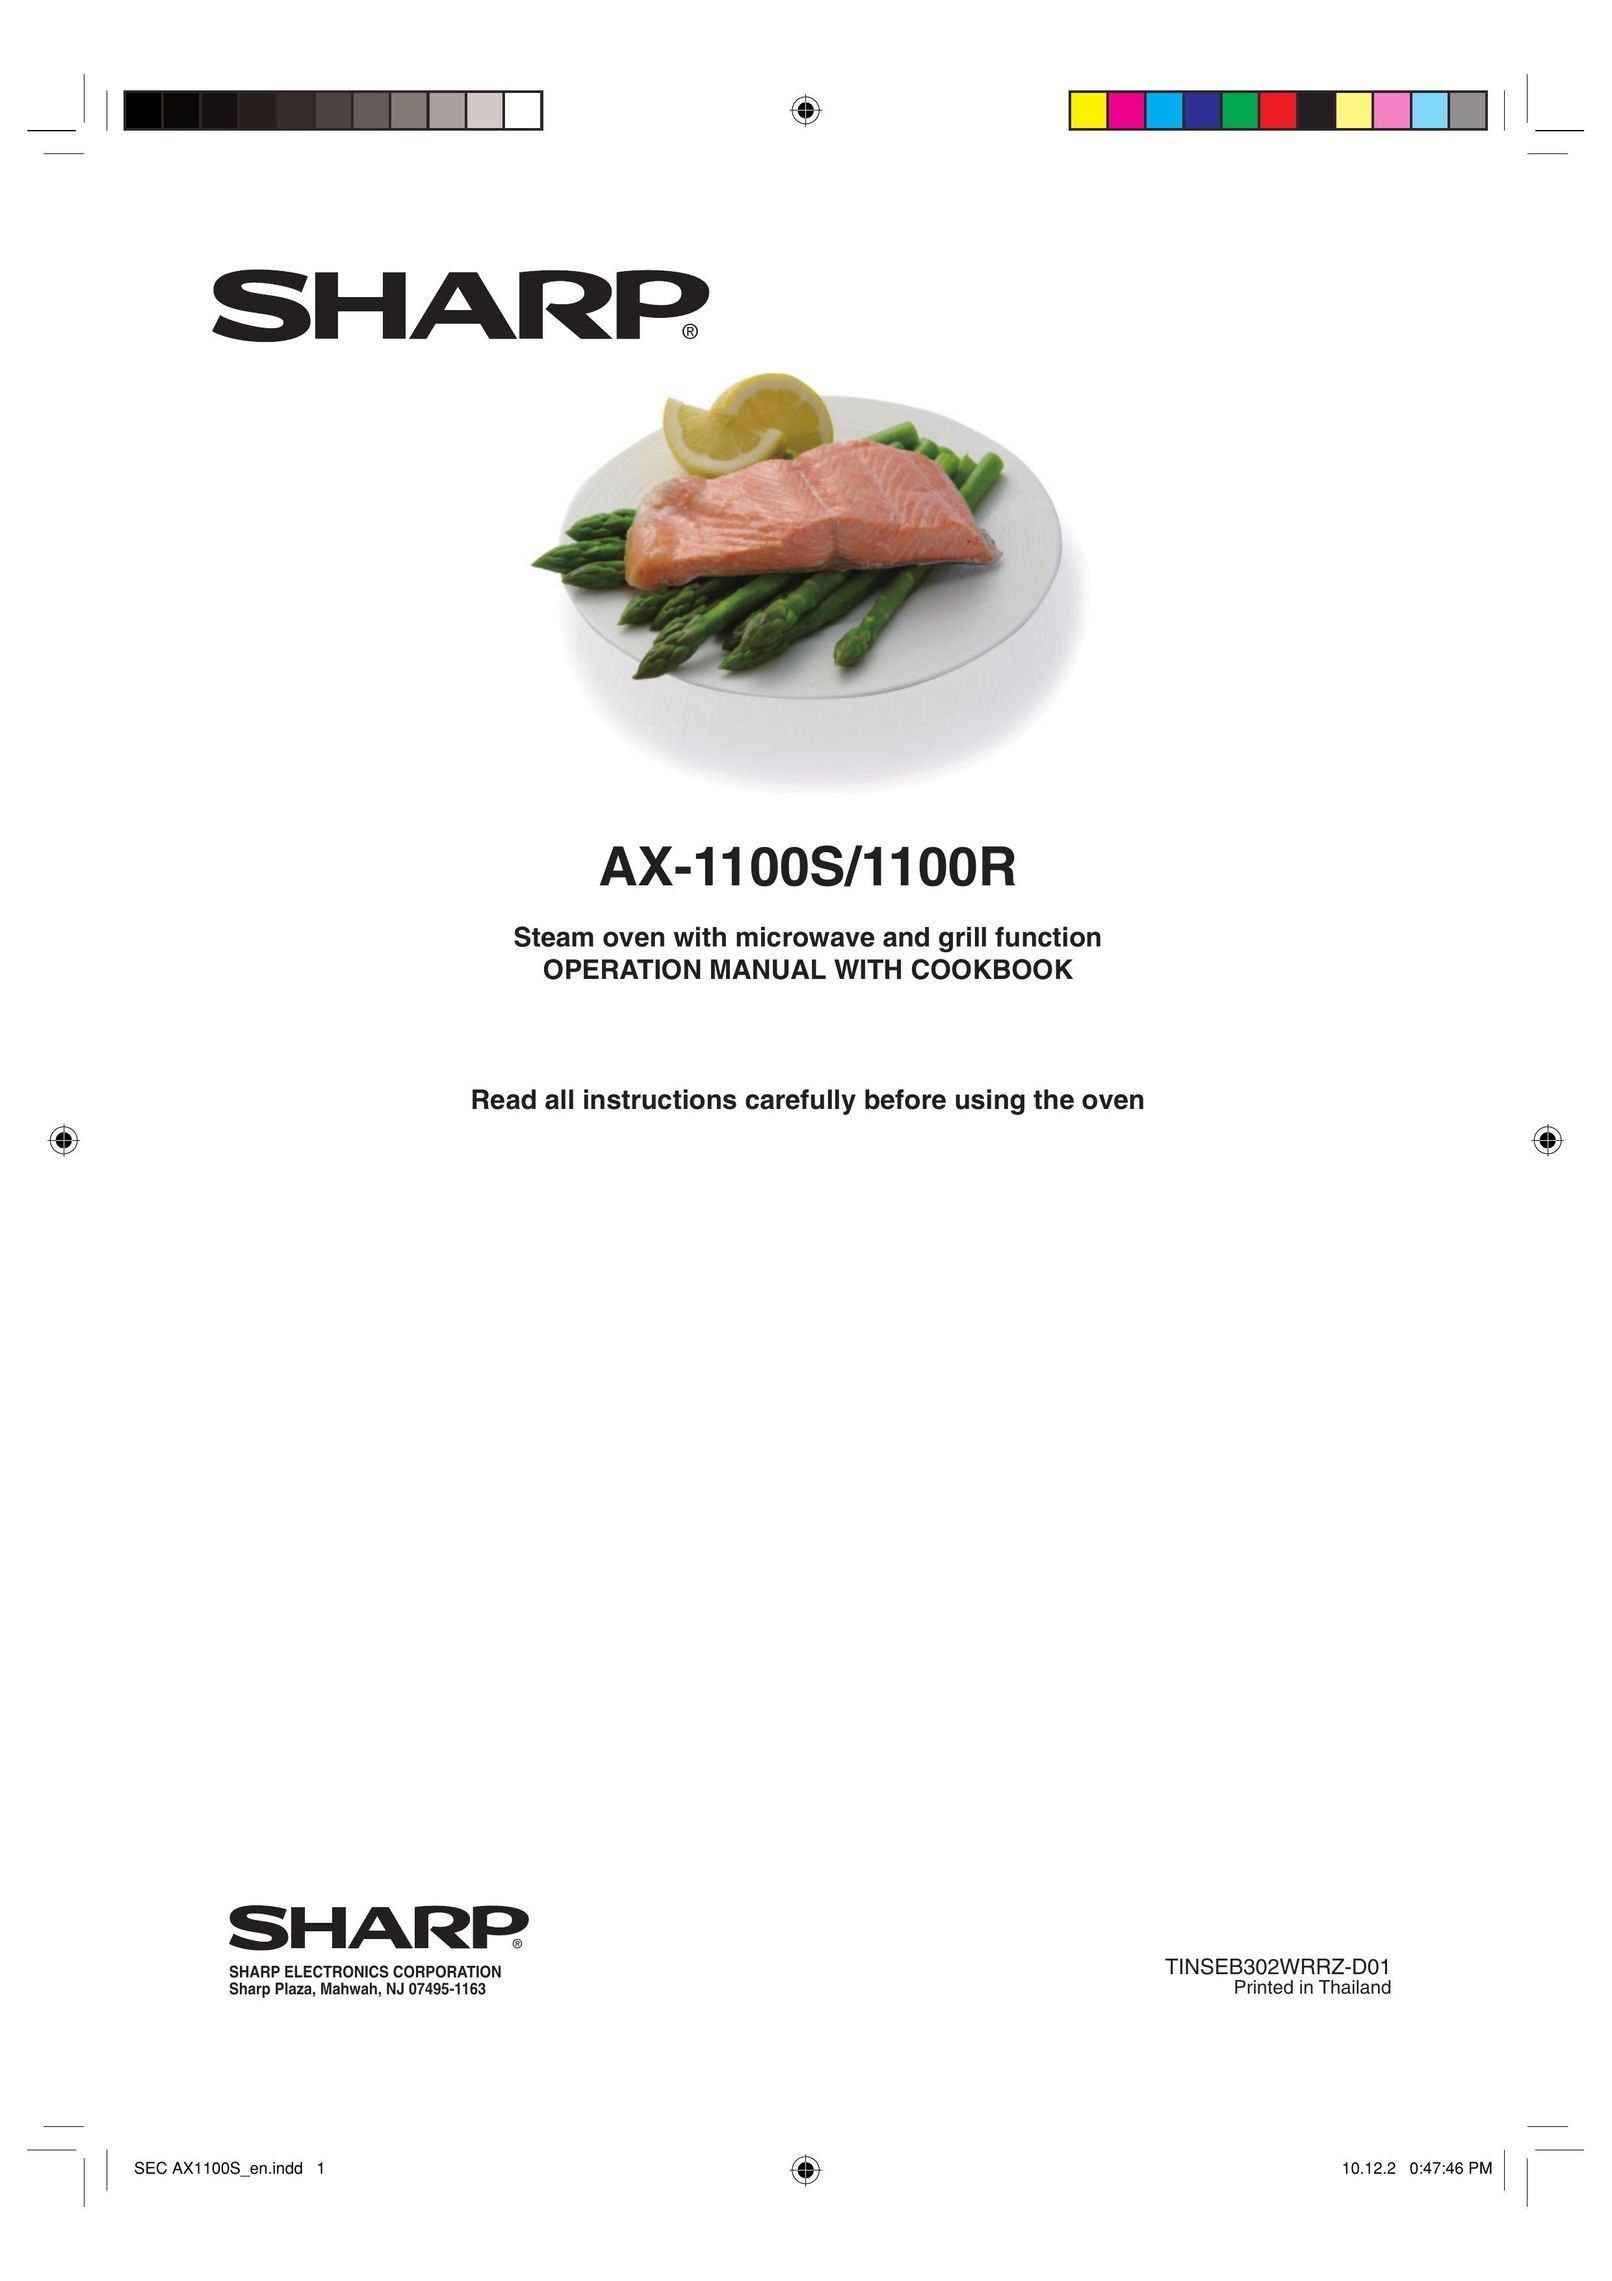 Sharp AX-1100R Oven User Manual